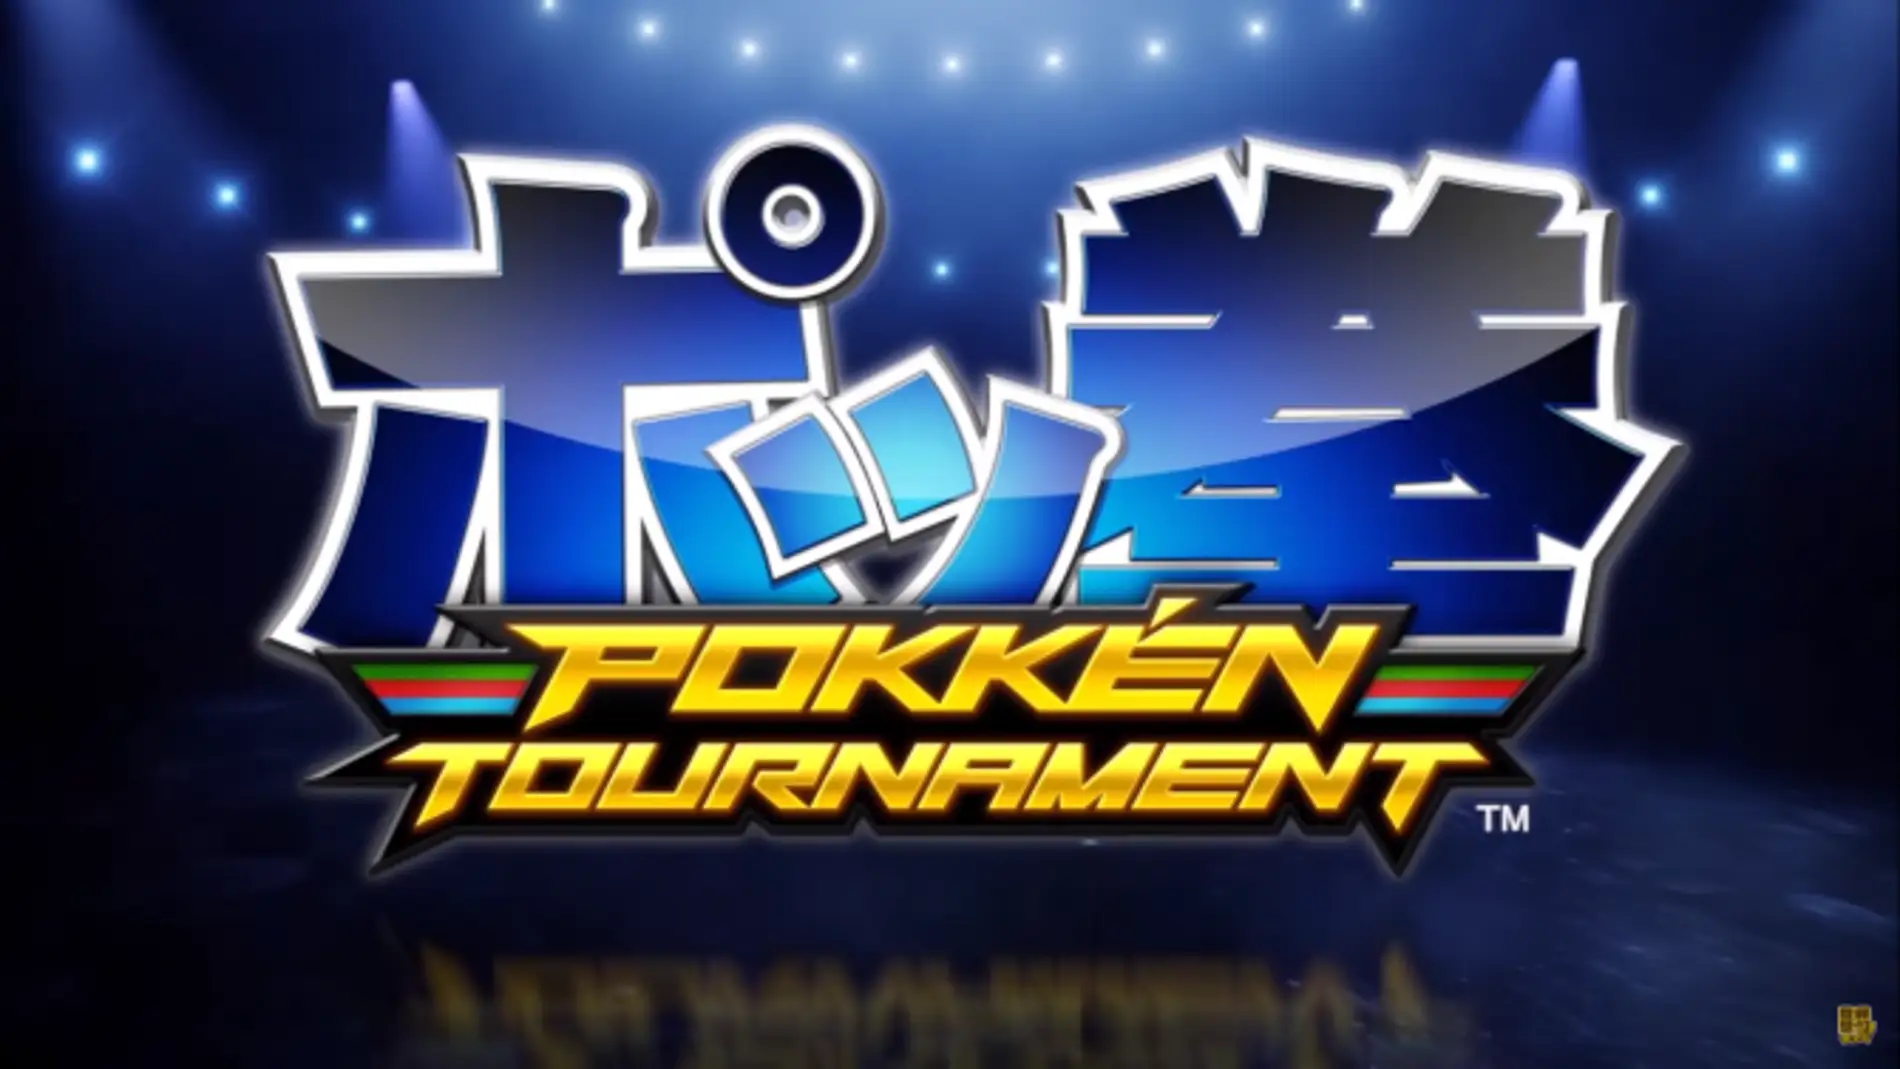 Pókken Tournament